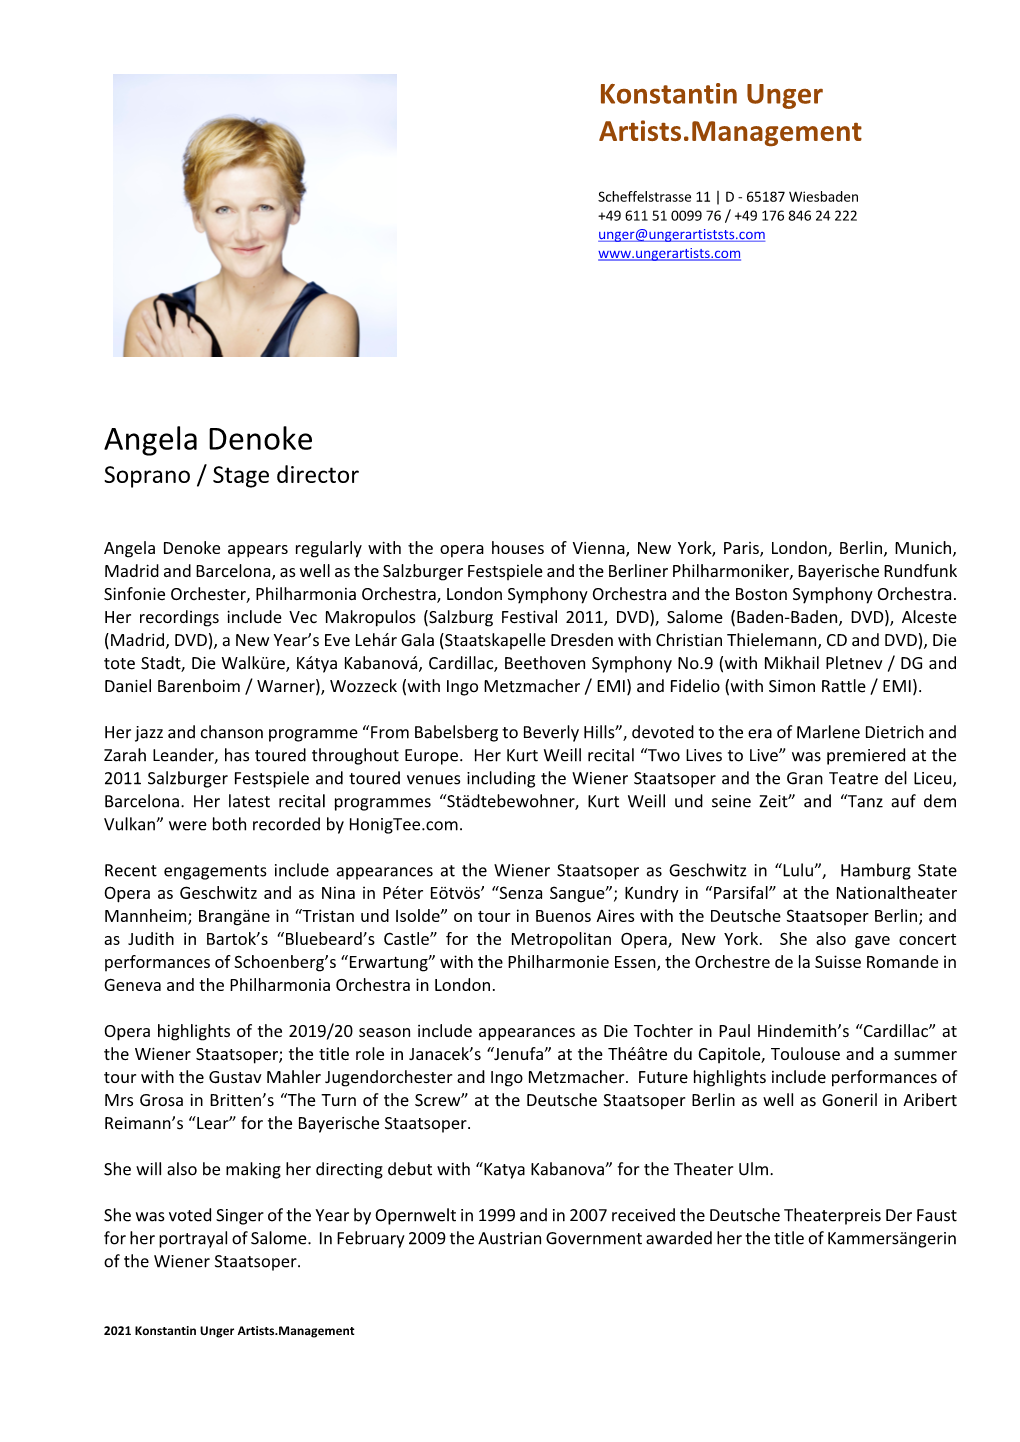 Angela Denoke Soprano / Stage Director